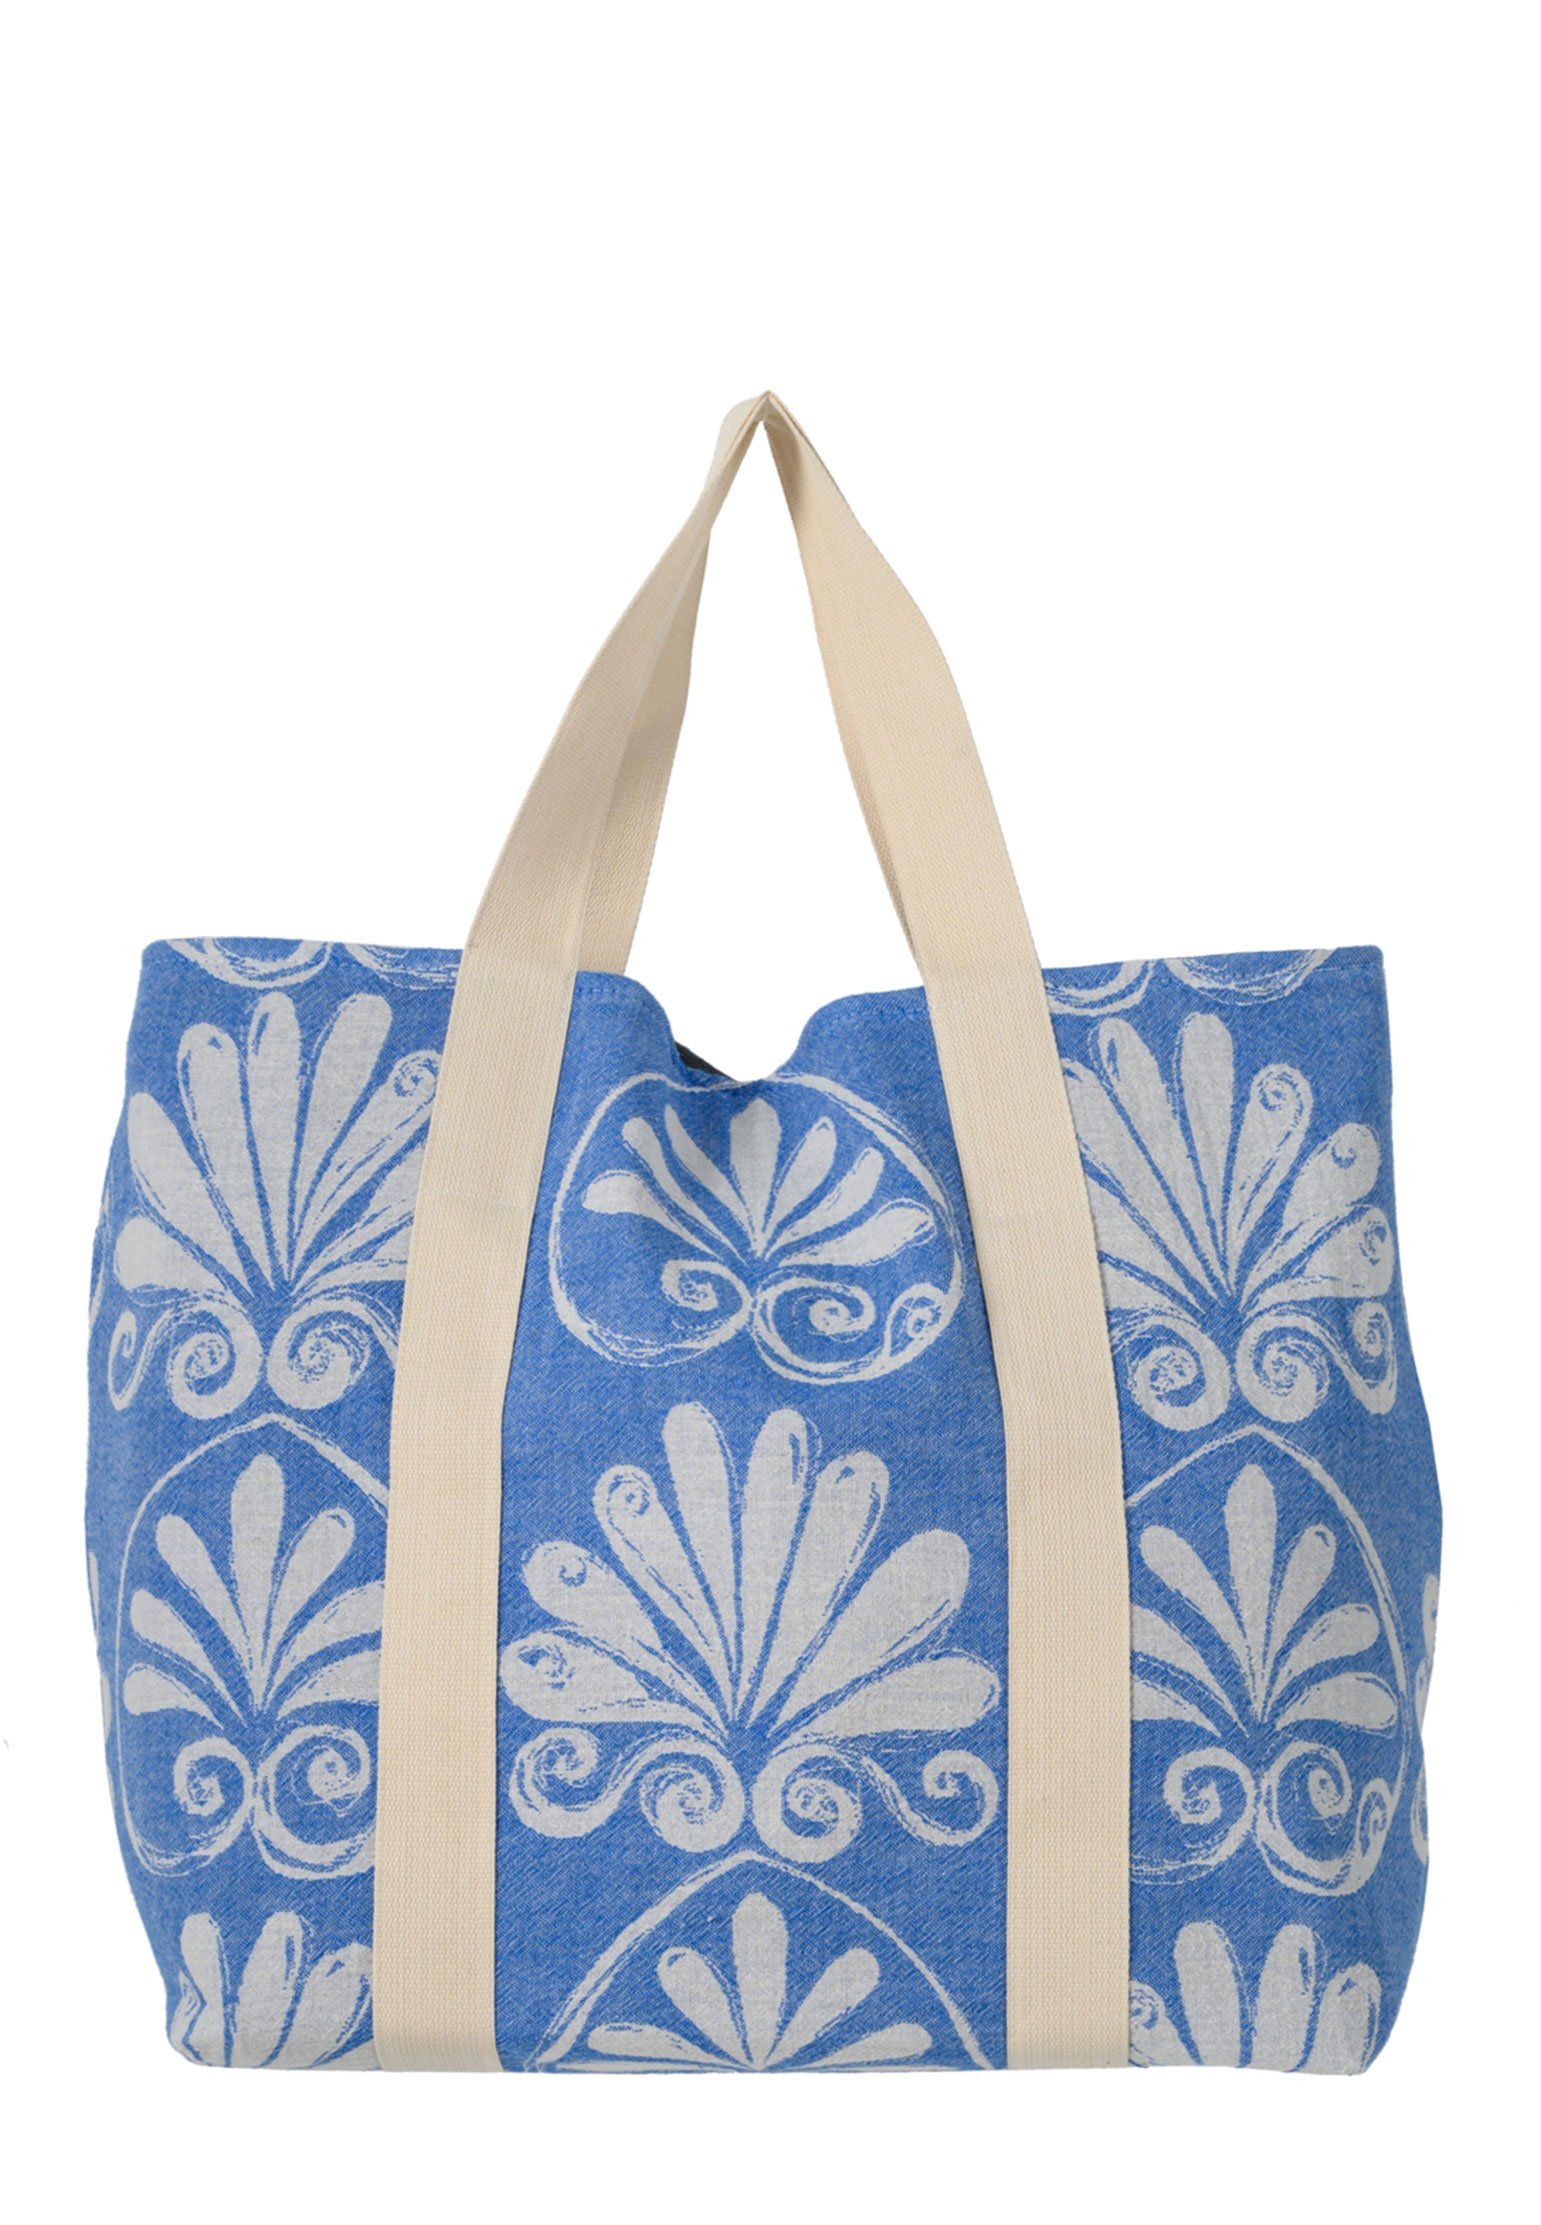 Bag AELIA ANNA Color: blue (Code: 4003) in online store Allure